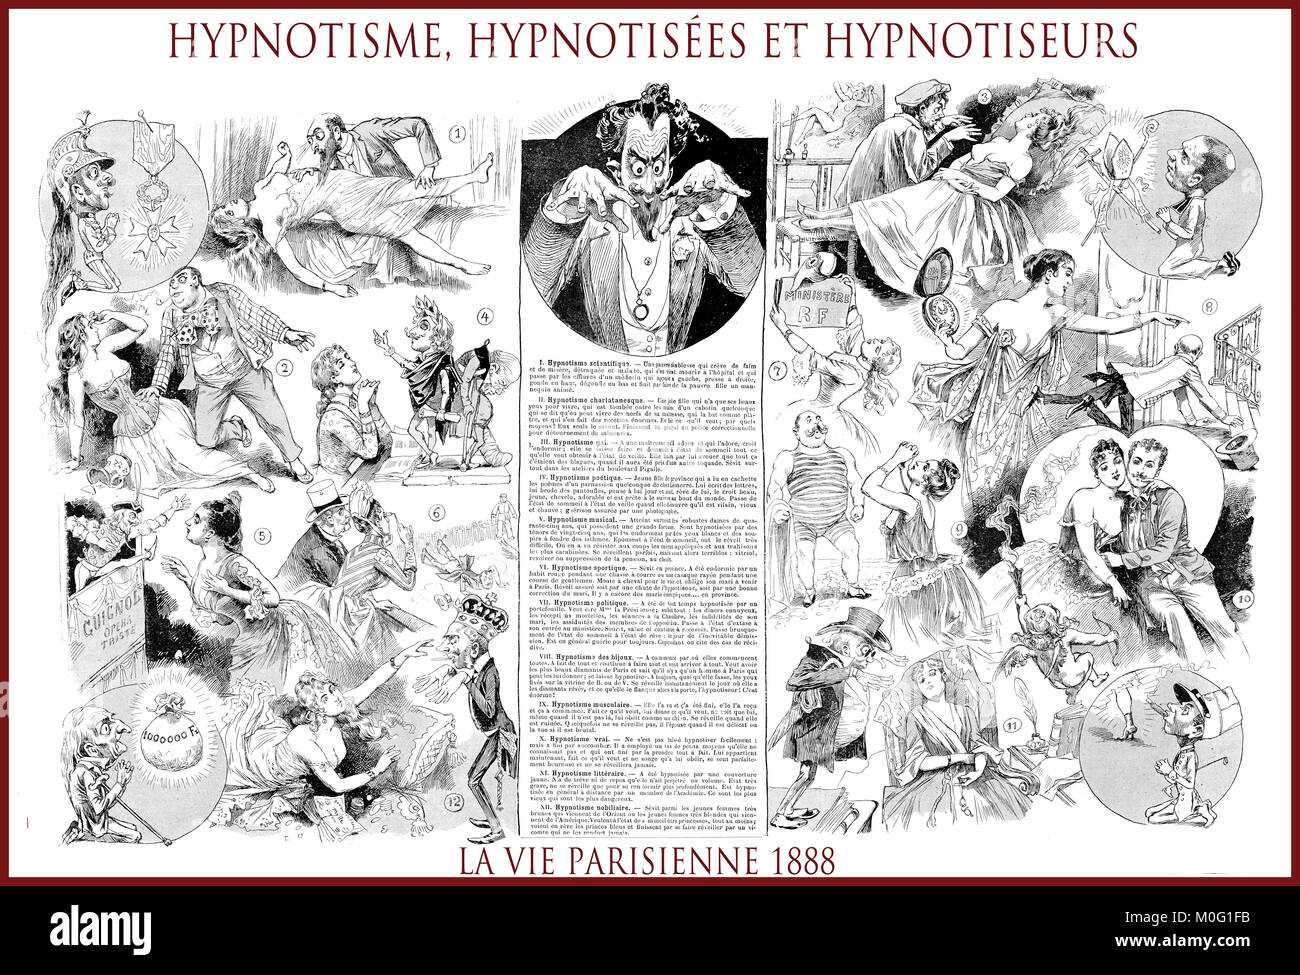 French satirical magazine La vie Parisienne 1888, central page:hypnotisme, hypnotisées et hypnotiseur - hypnotism, hypnotized and hypnostist. Humor, caricatures, portraits Stock Photo